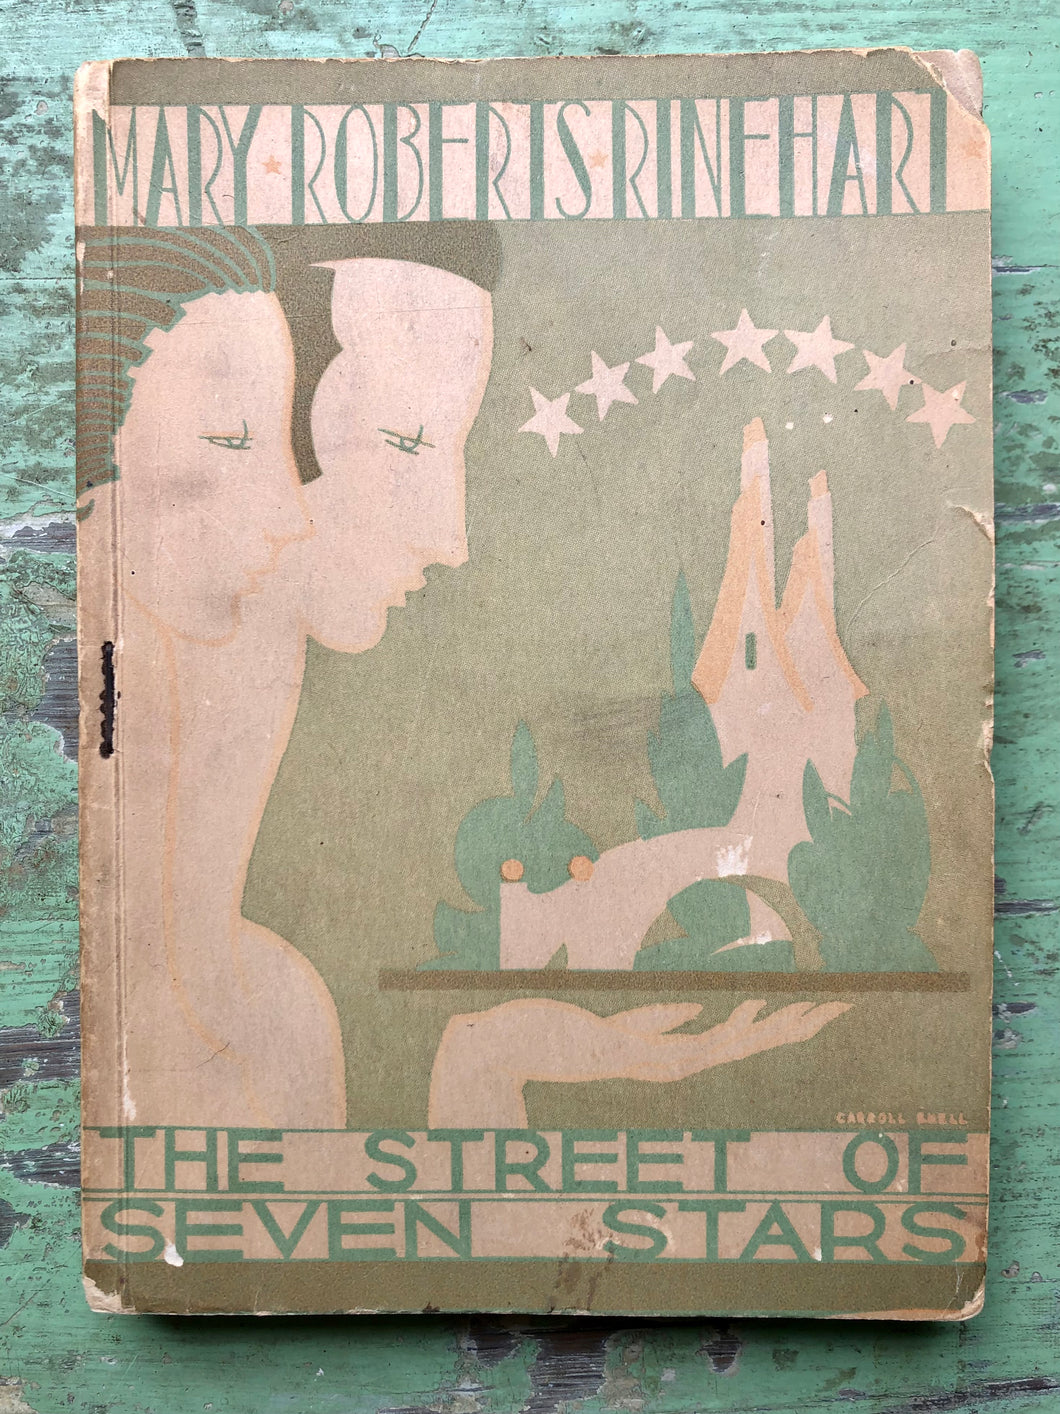 The Street of Seven Stars. by Mary Roberts Rinehart